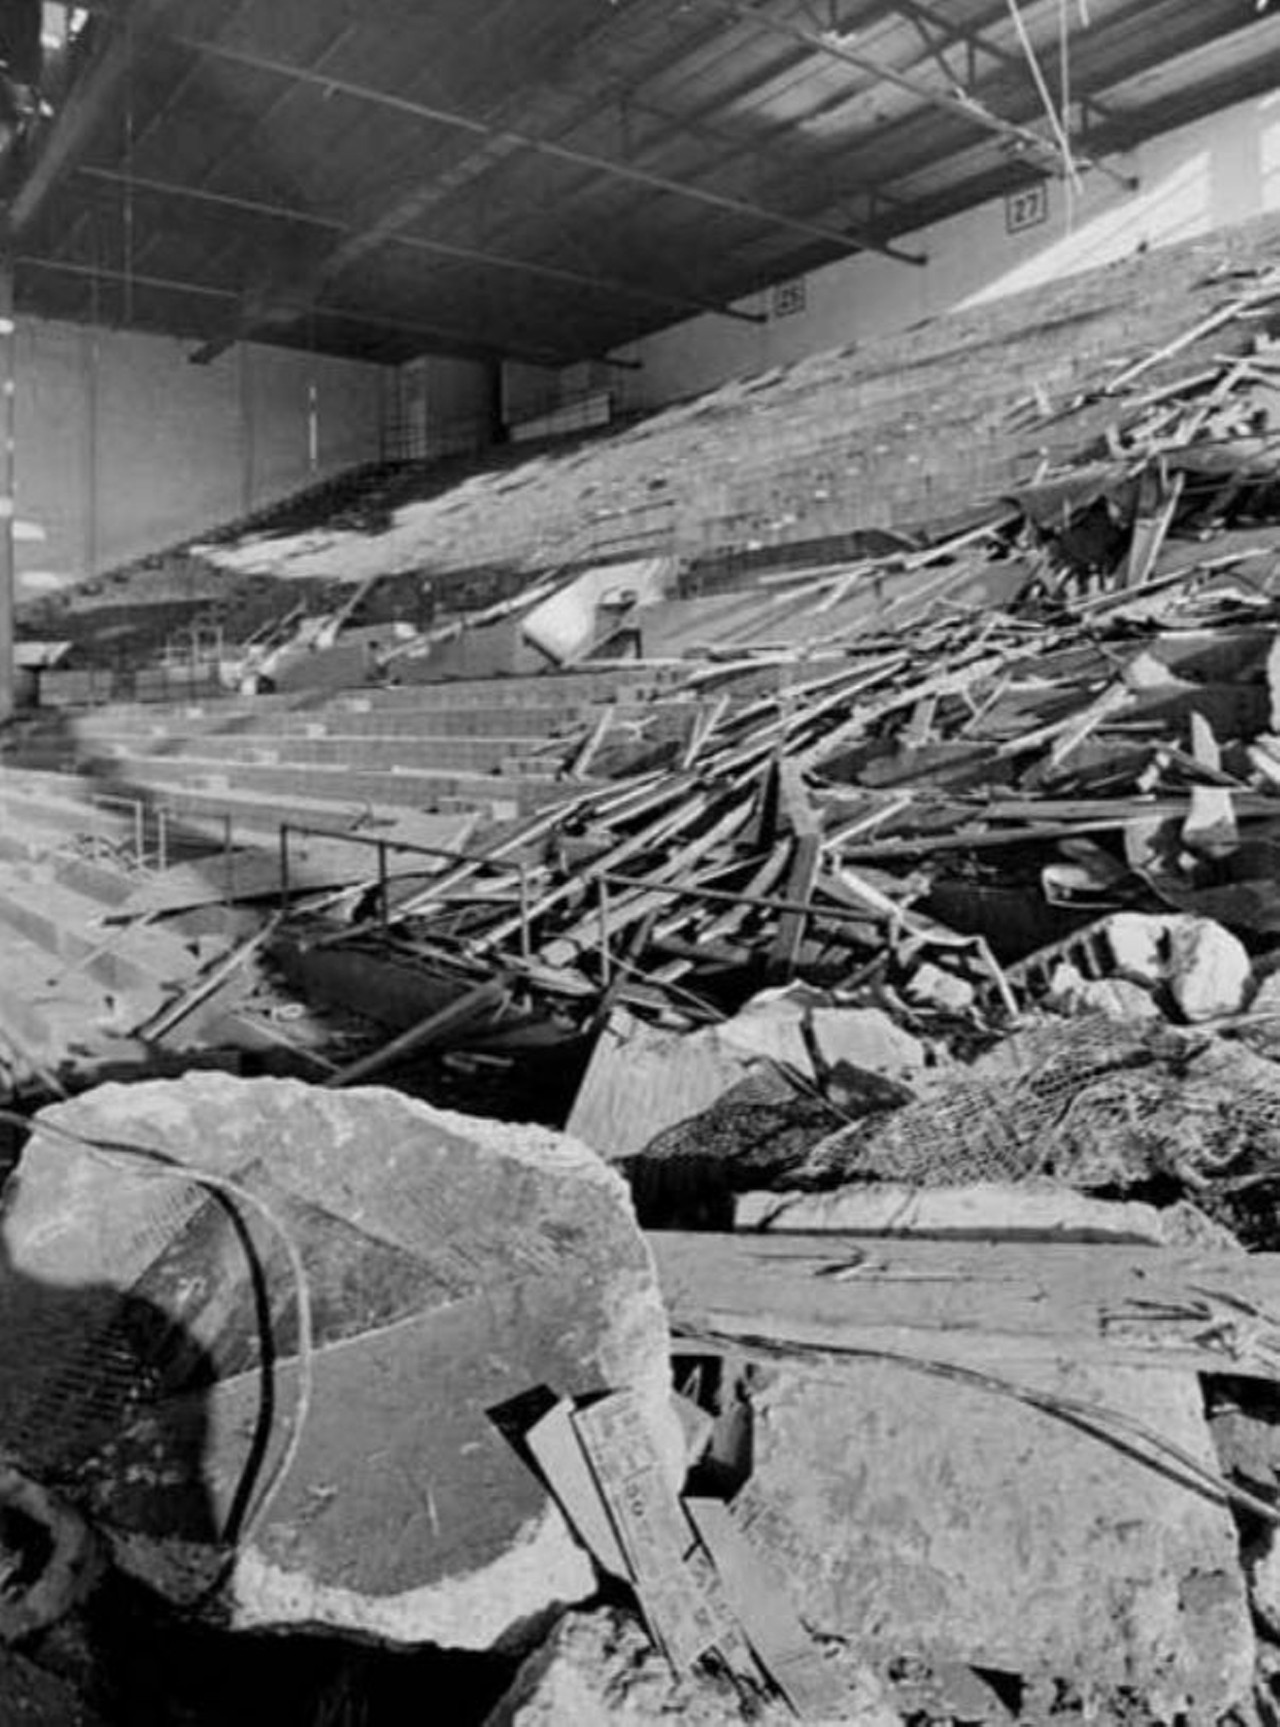 Cleveland Arena interior during demolition